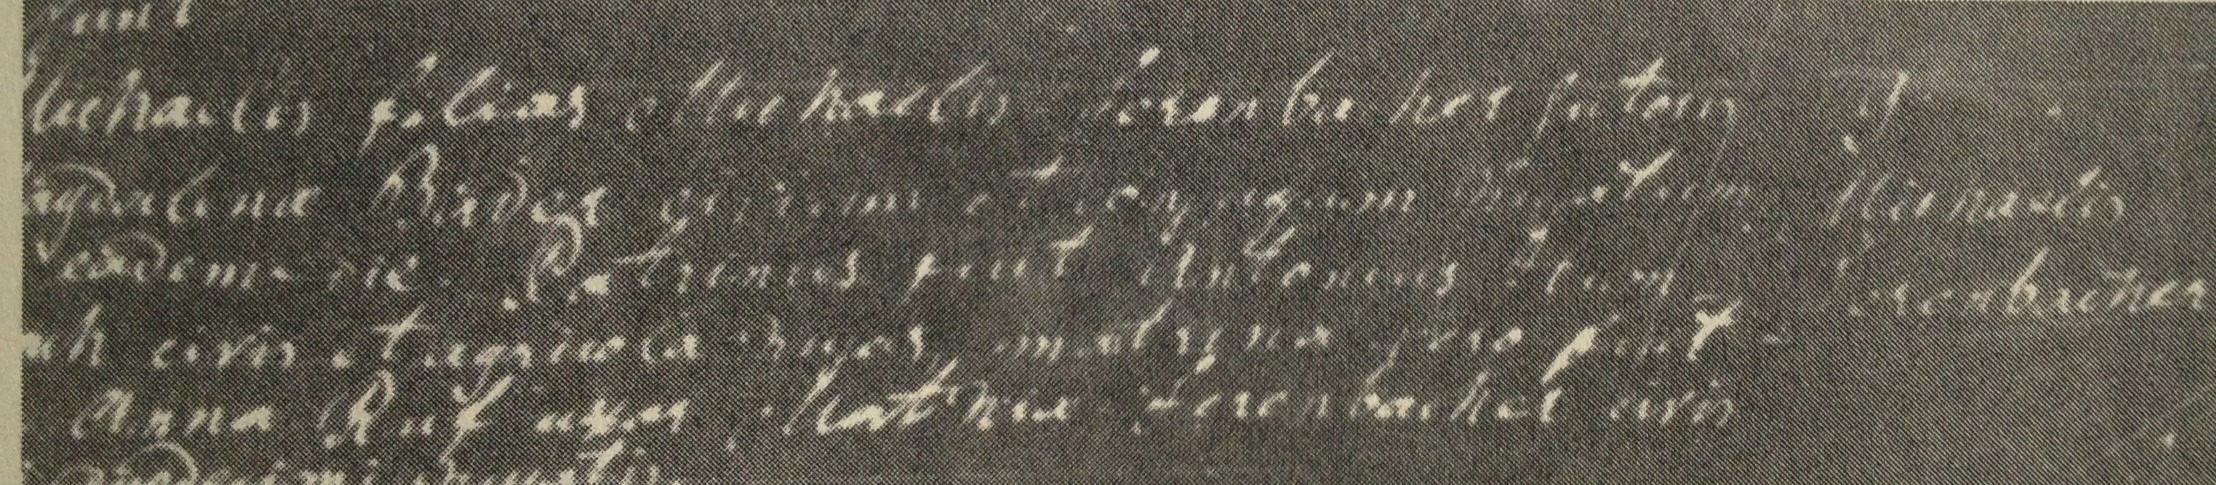 Birth or Baptismal Record of Michael Ferenbacher, 1808